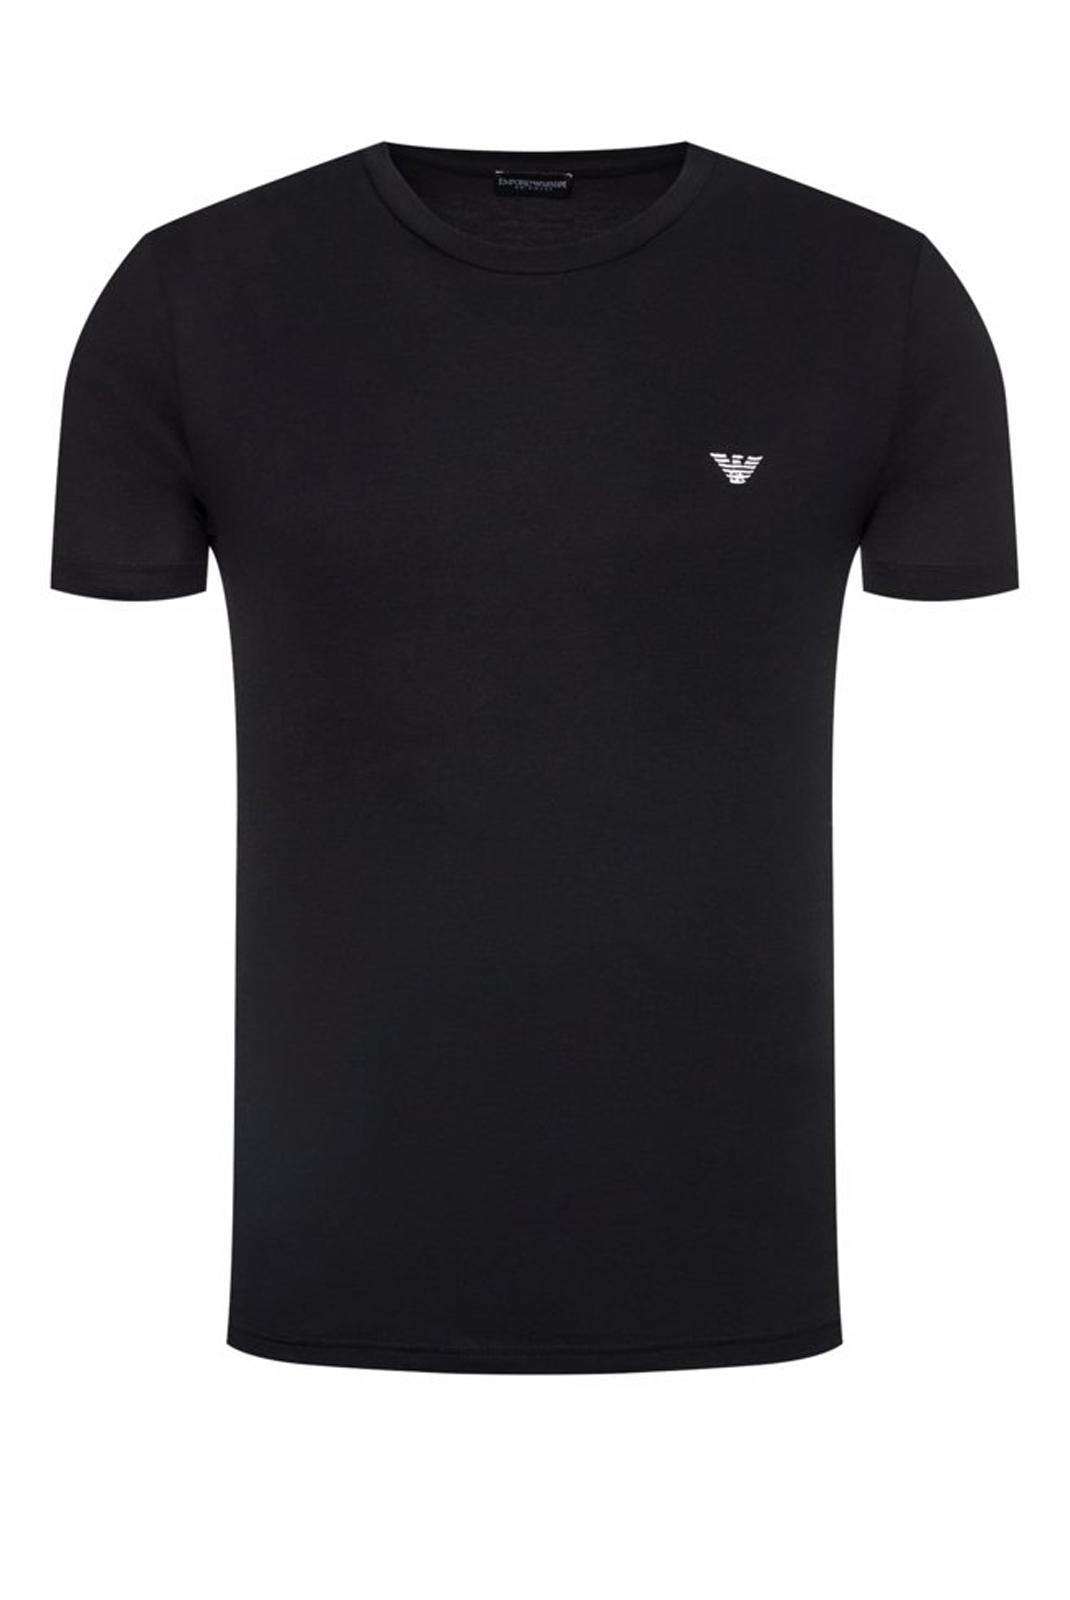 Tee-shirt noir manches courtes & col rond EA7 homme 211818